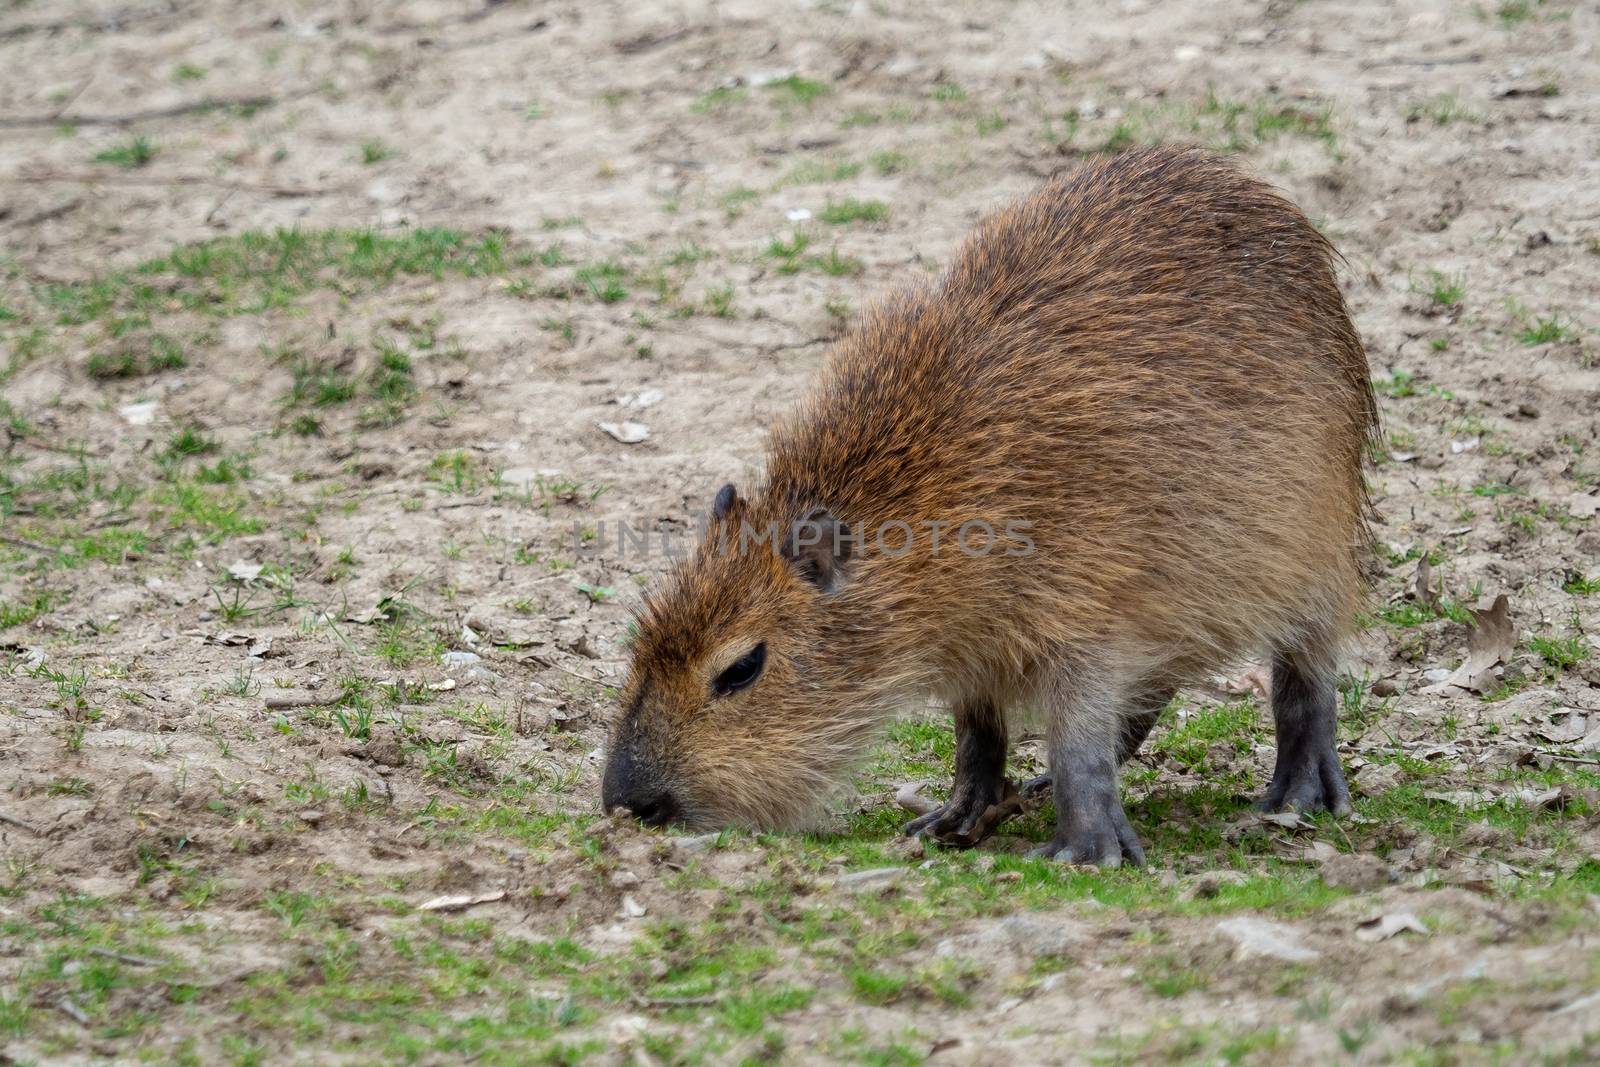 Capybara - Hydrochoerus hydrochaeris eats grass